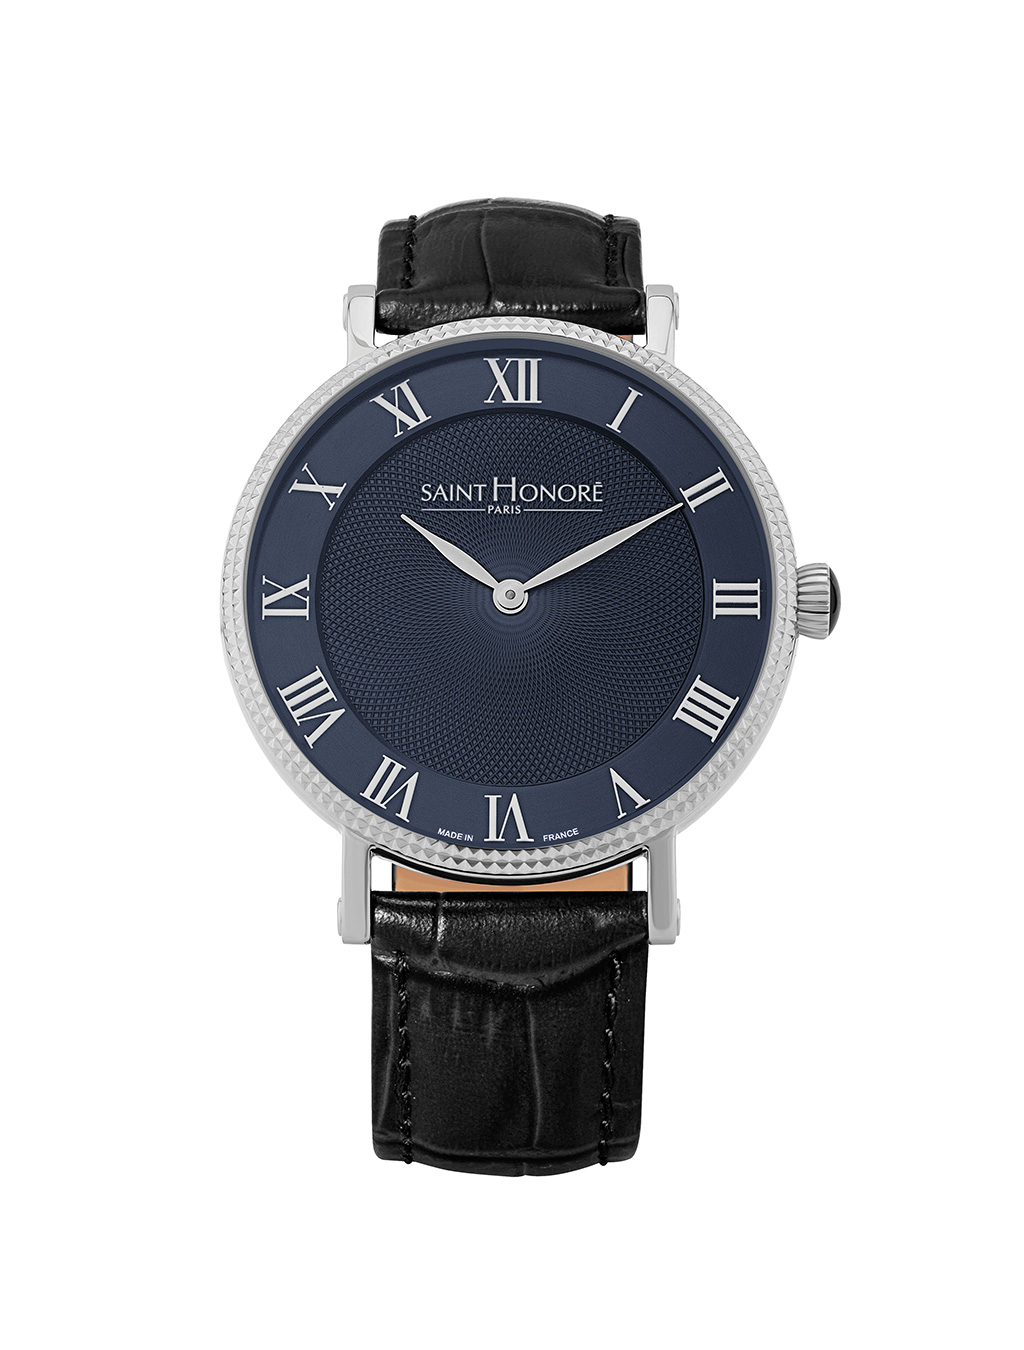 TROCADERO Men's watch - stainless steel case, blue dial, black leather strap